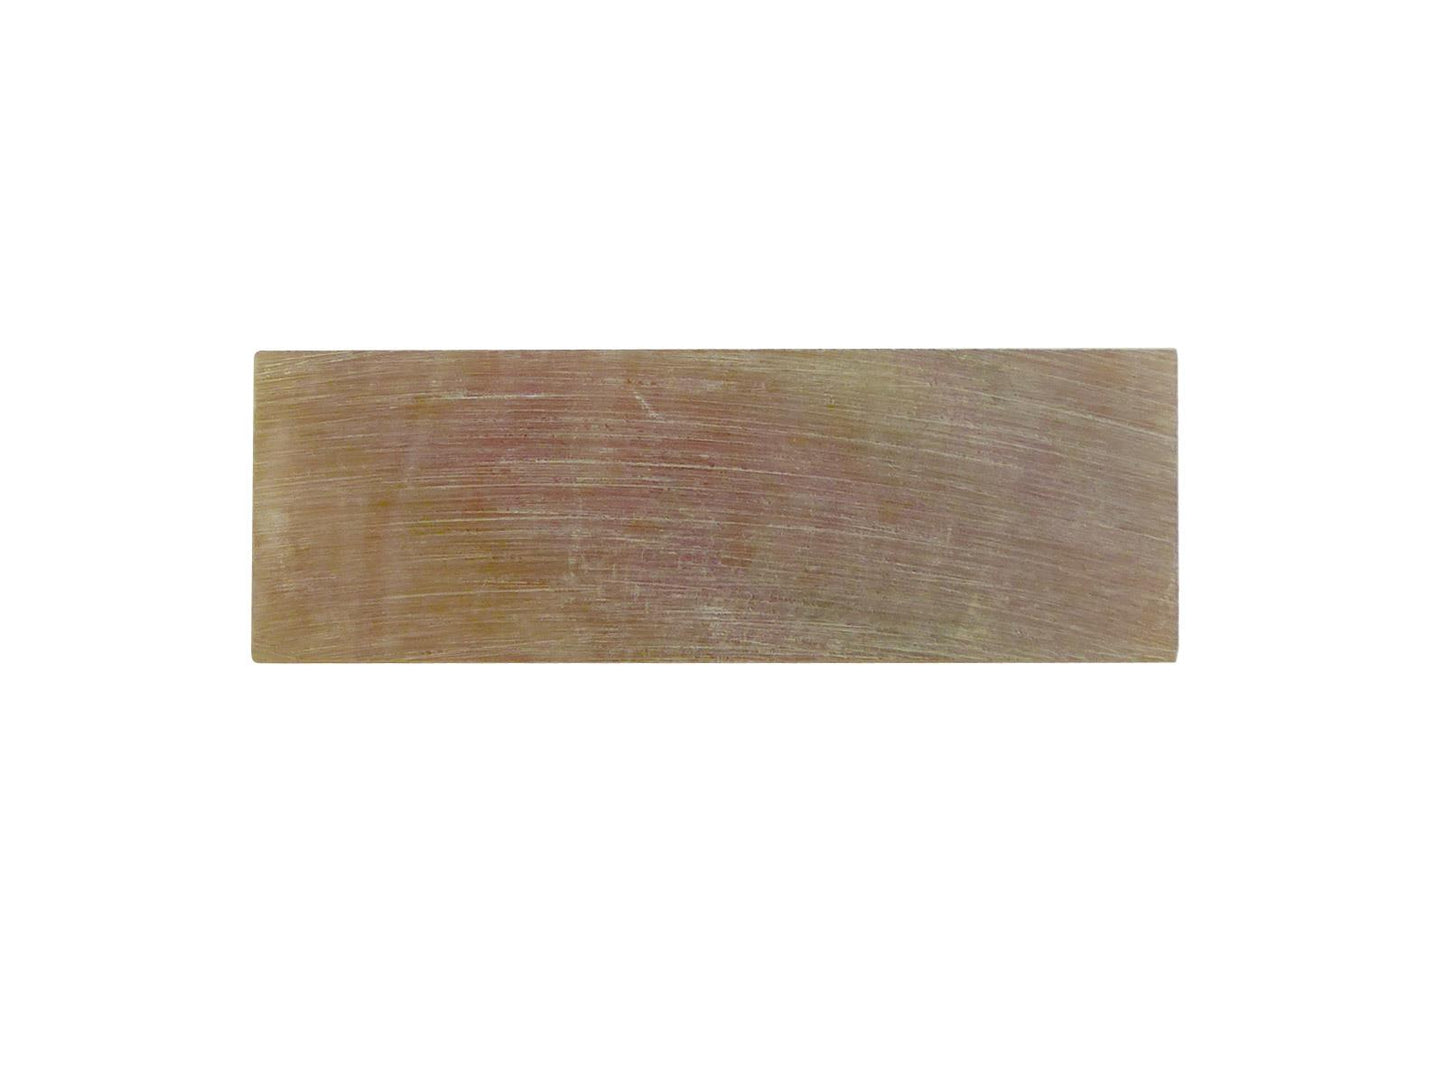 Incudo Greenlip Abalone Inlay Blank - 30x10x1mm (1.2x0.39x0.04")